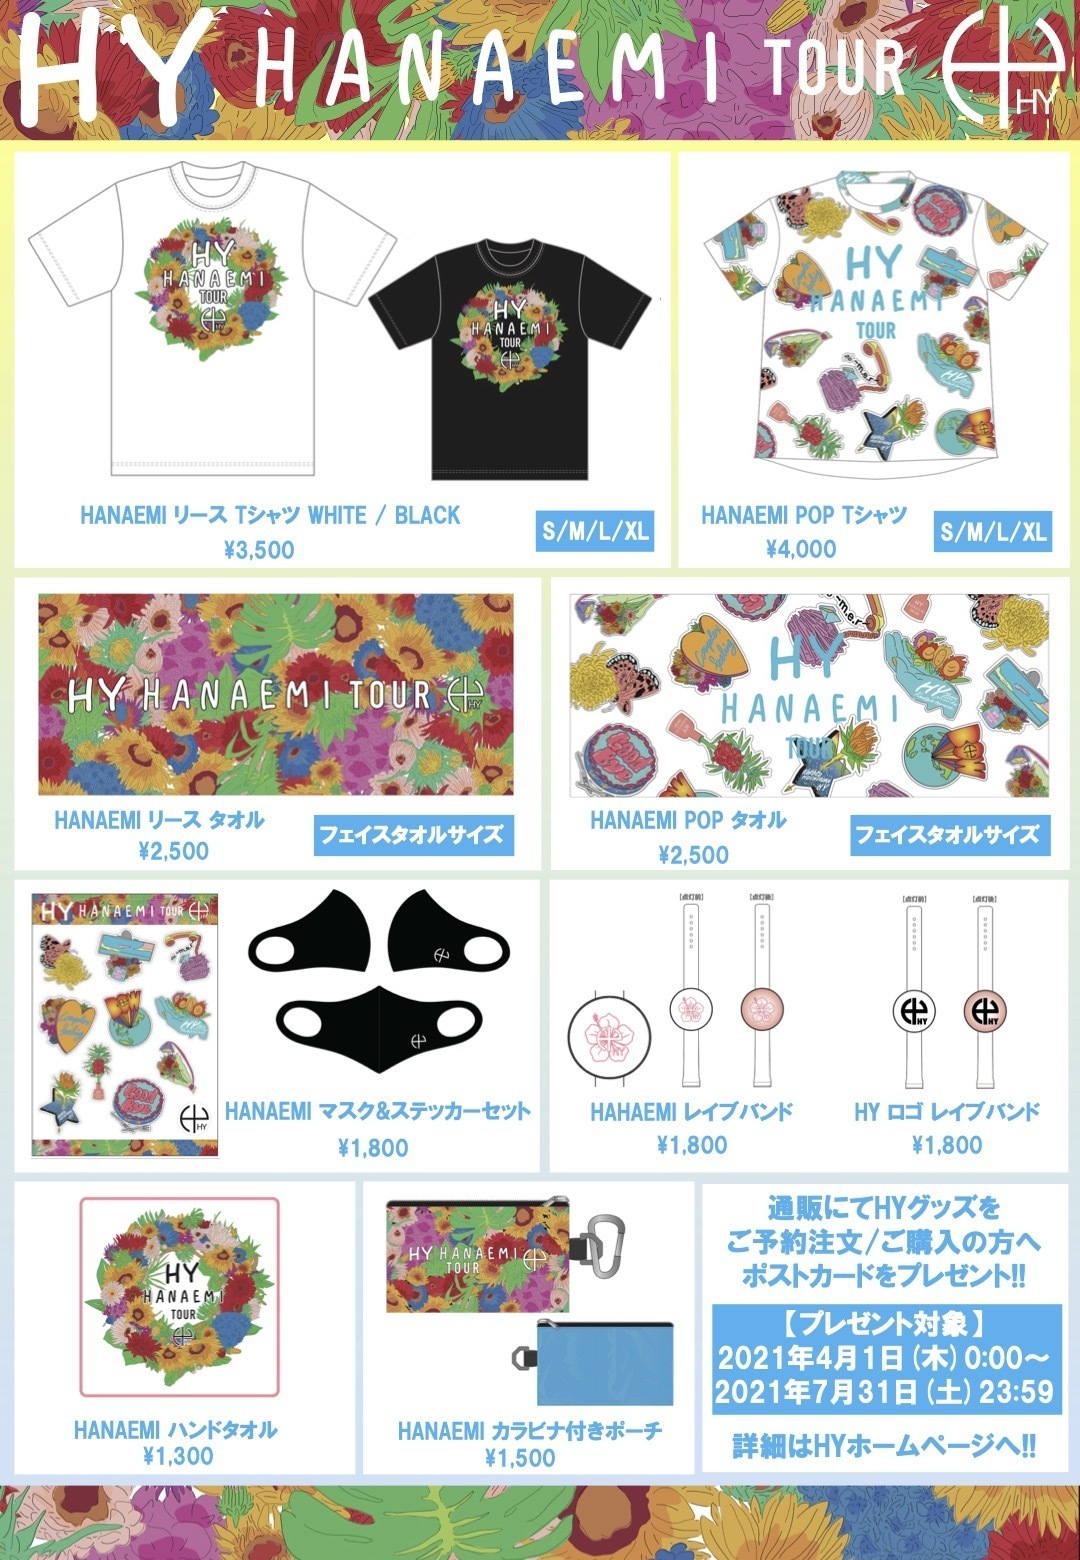 HY HANAEMI TOUR 2021グッズの通販が2021/5/29(土)am11:00よりスタート！ | HYオフィシャルウェブサイト HY -ROAD